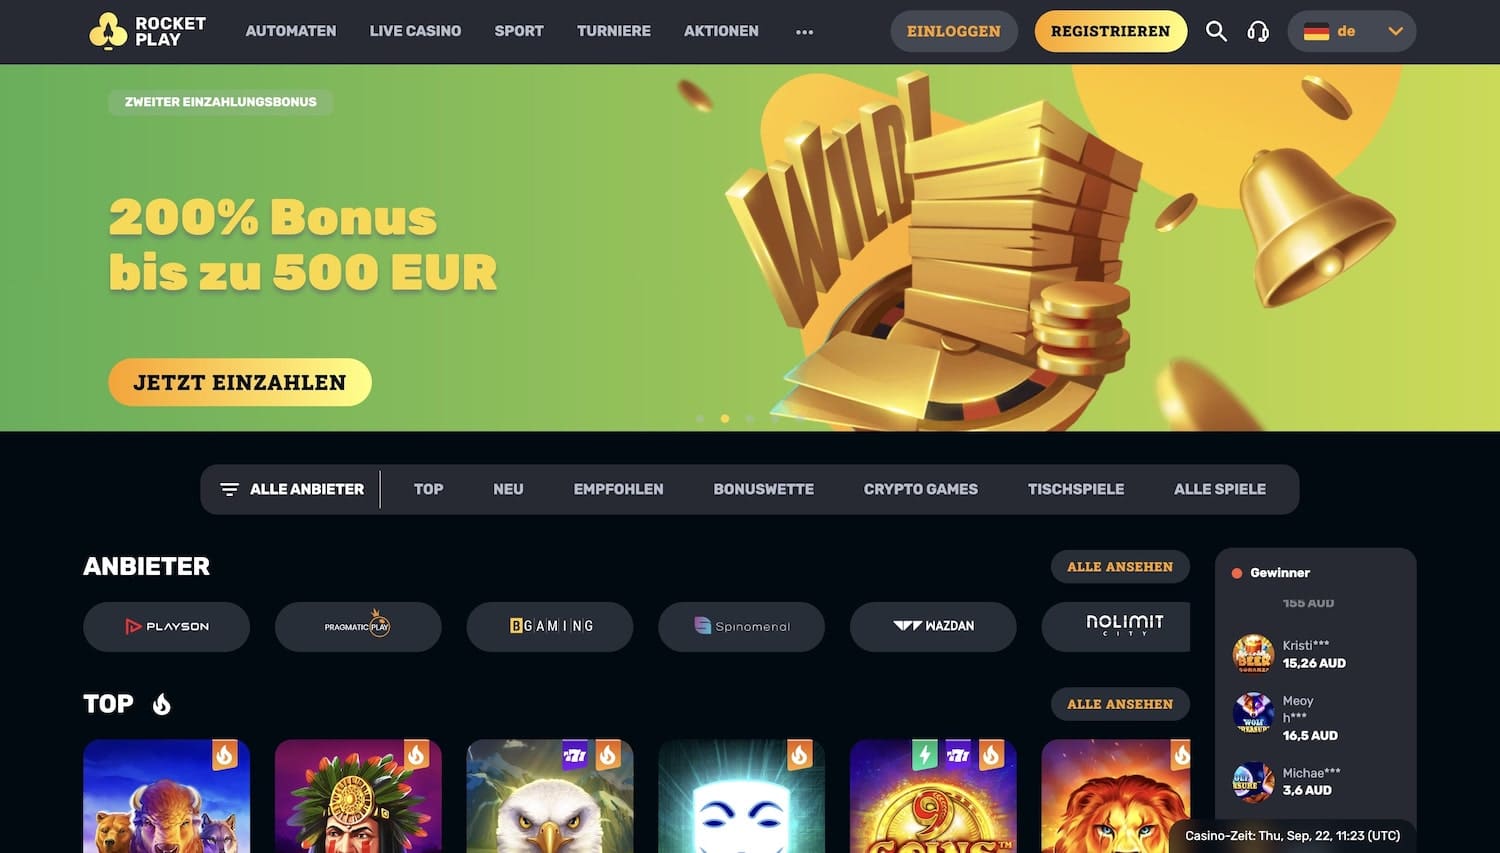 Offizielle Website der Rocketplay Casino